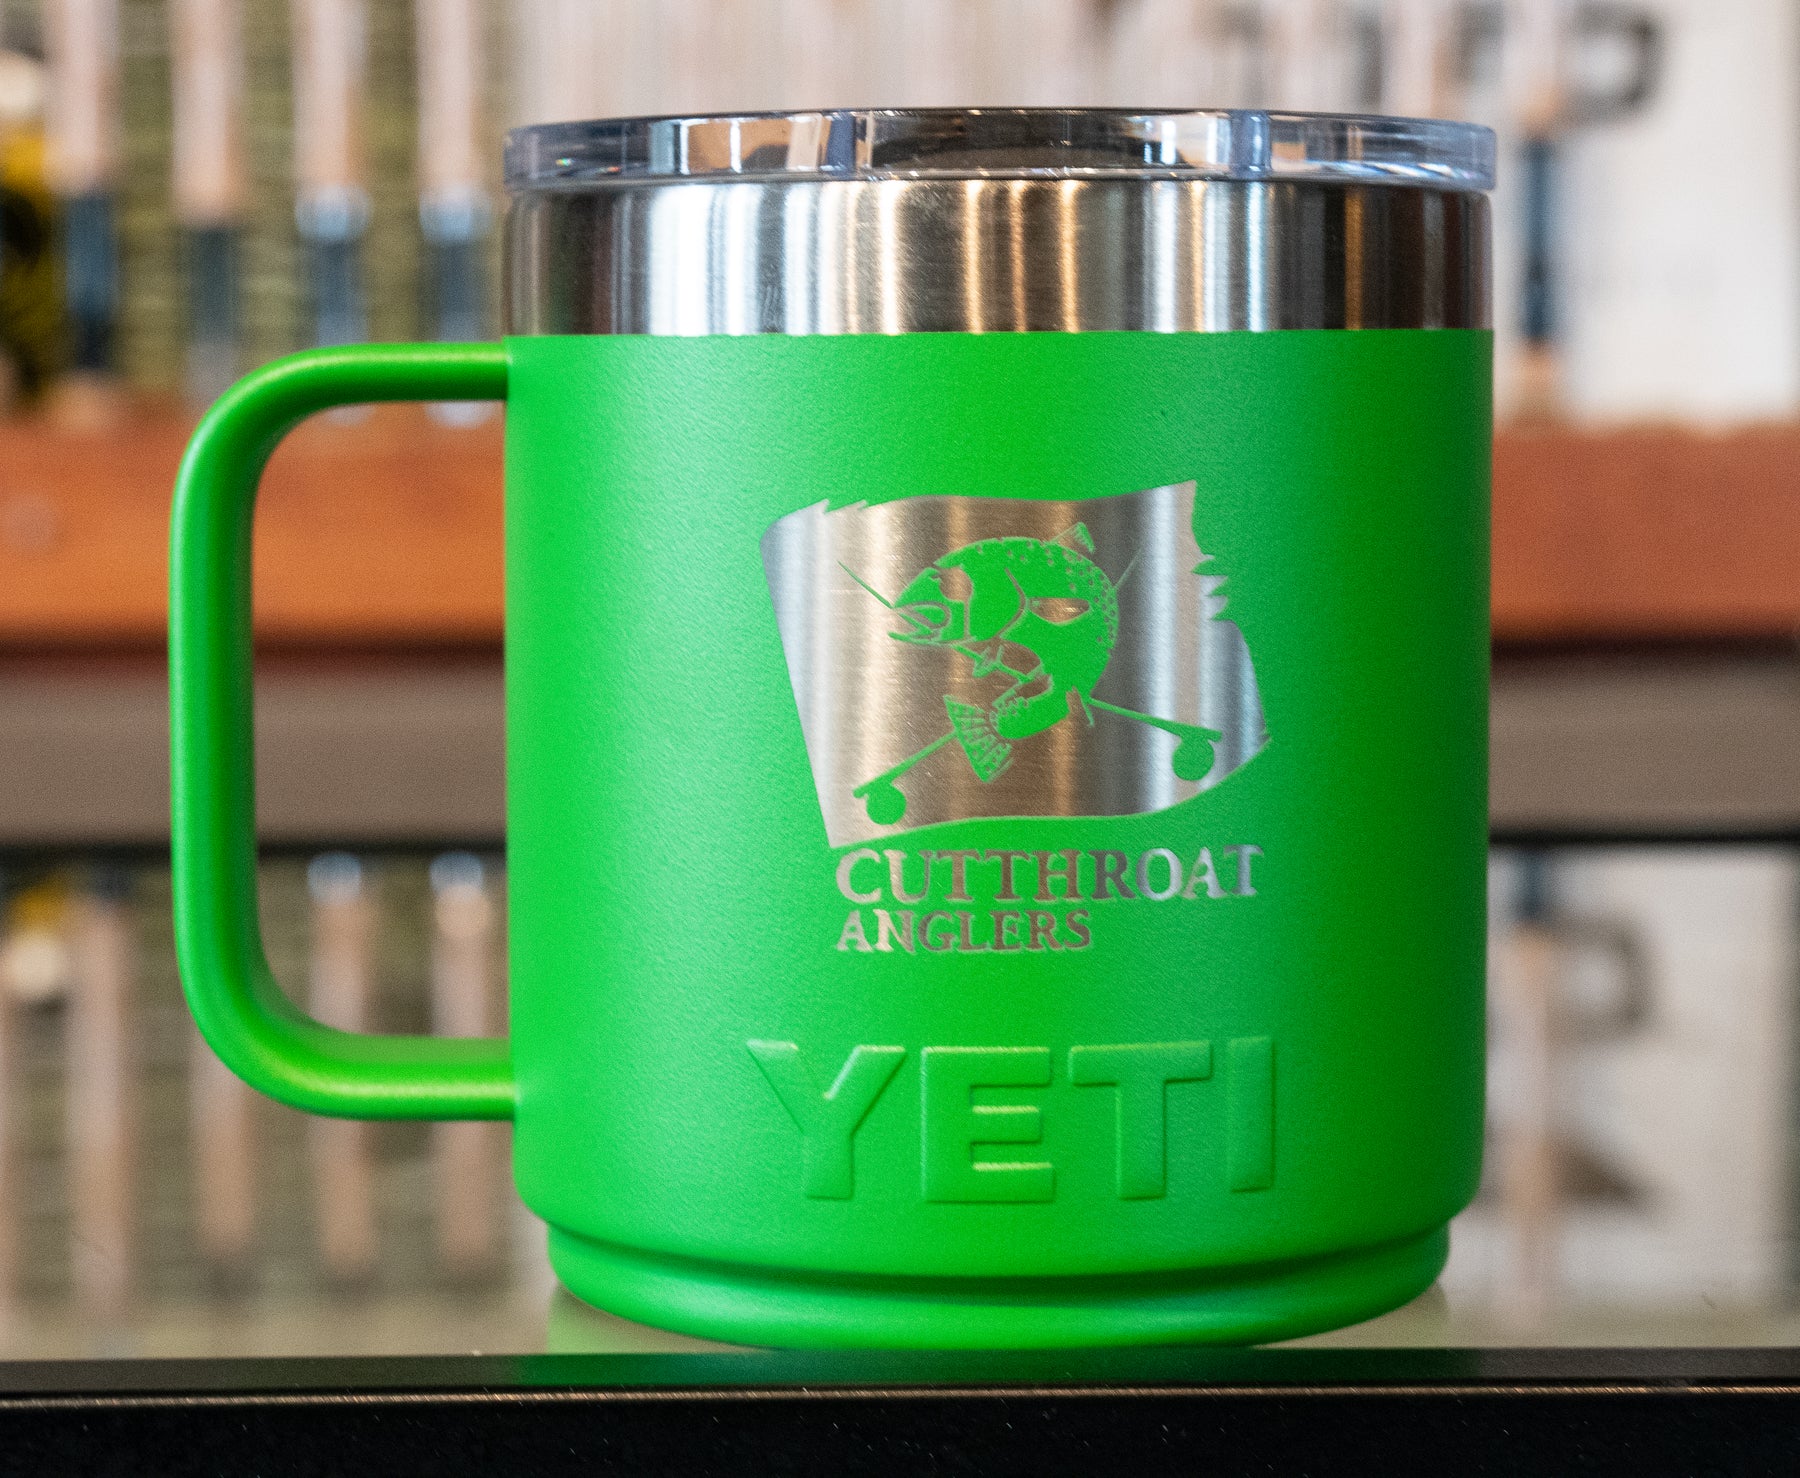 YETI MTS Logo Rambler 10 oz Mug MS High Desert Clay – Trout